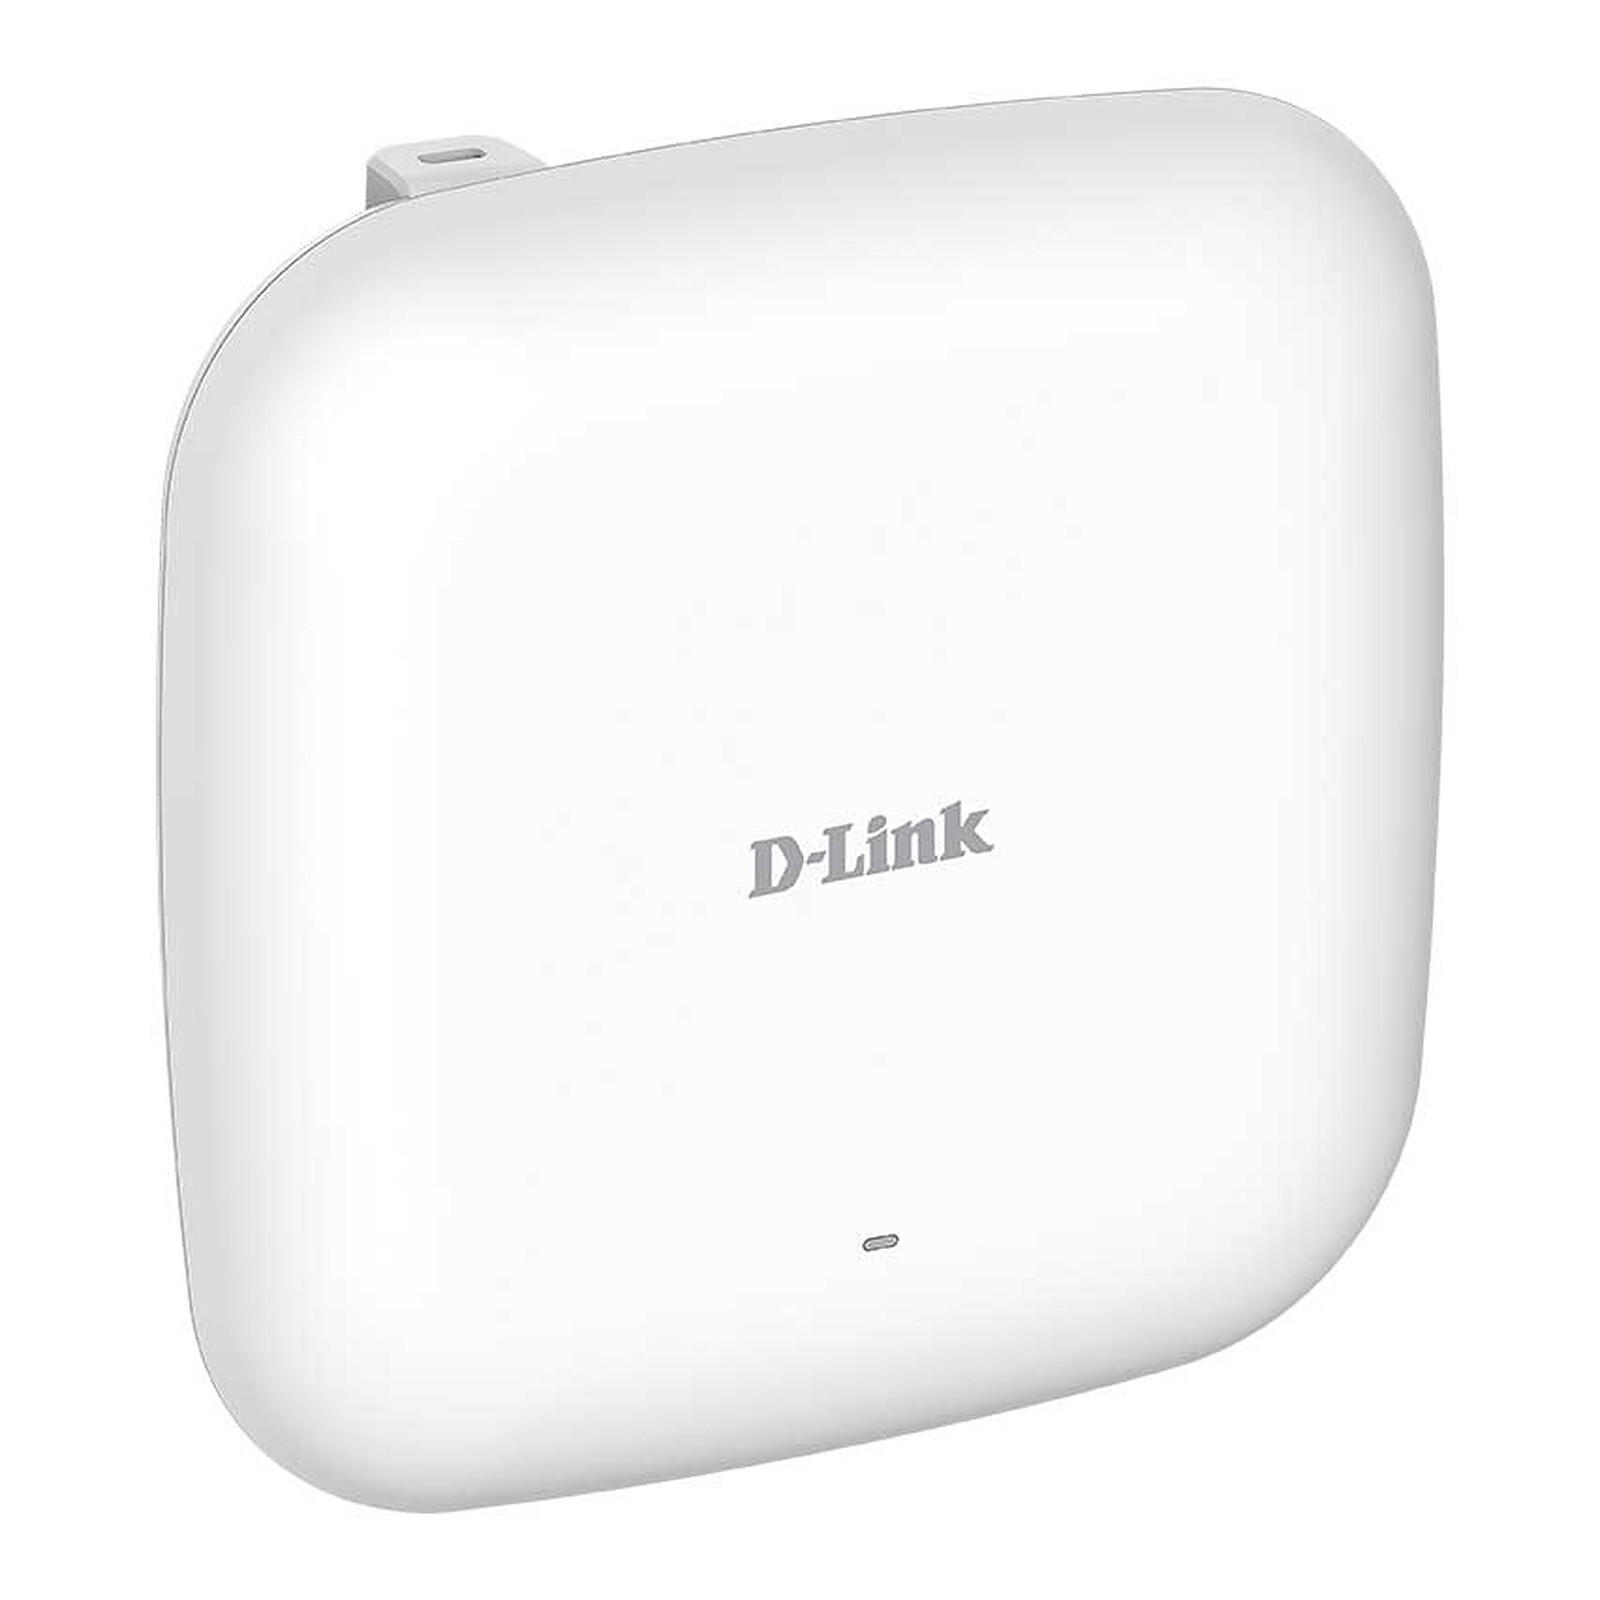 Zyxel Cloud WiFi6 AX1800 Wireless Access Point (802.11ax bi-bande